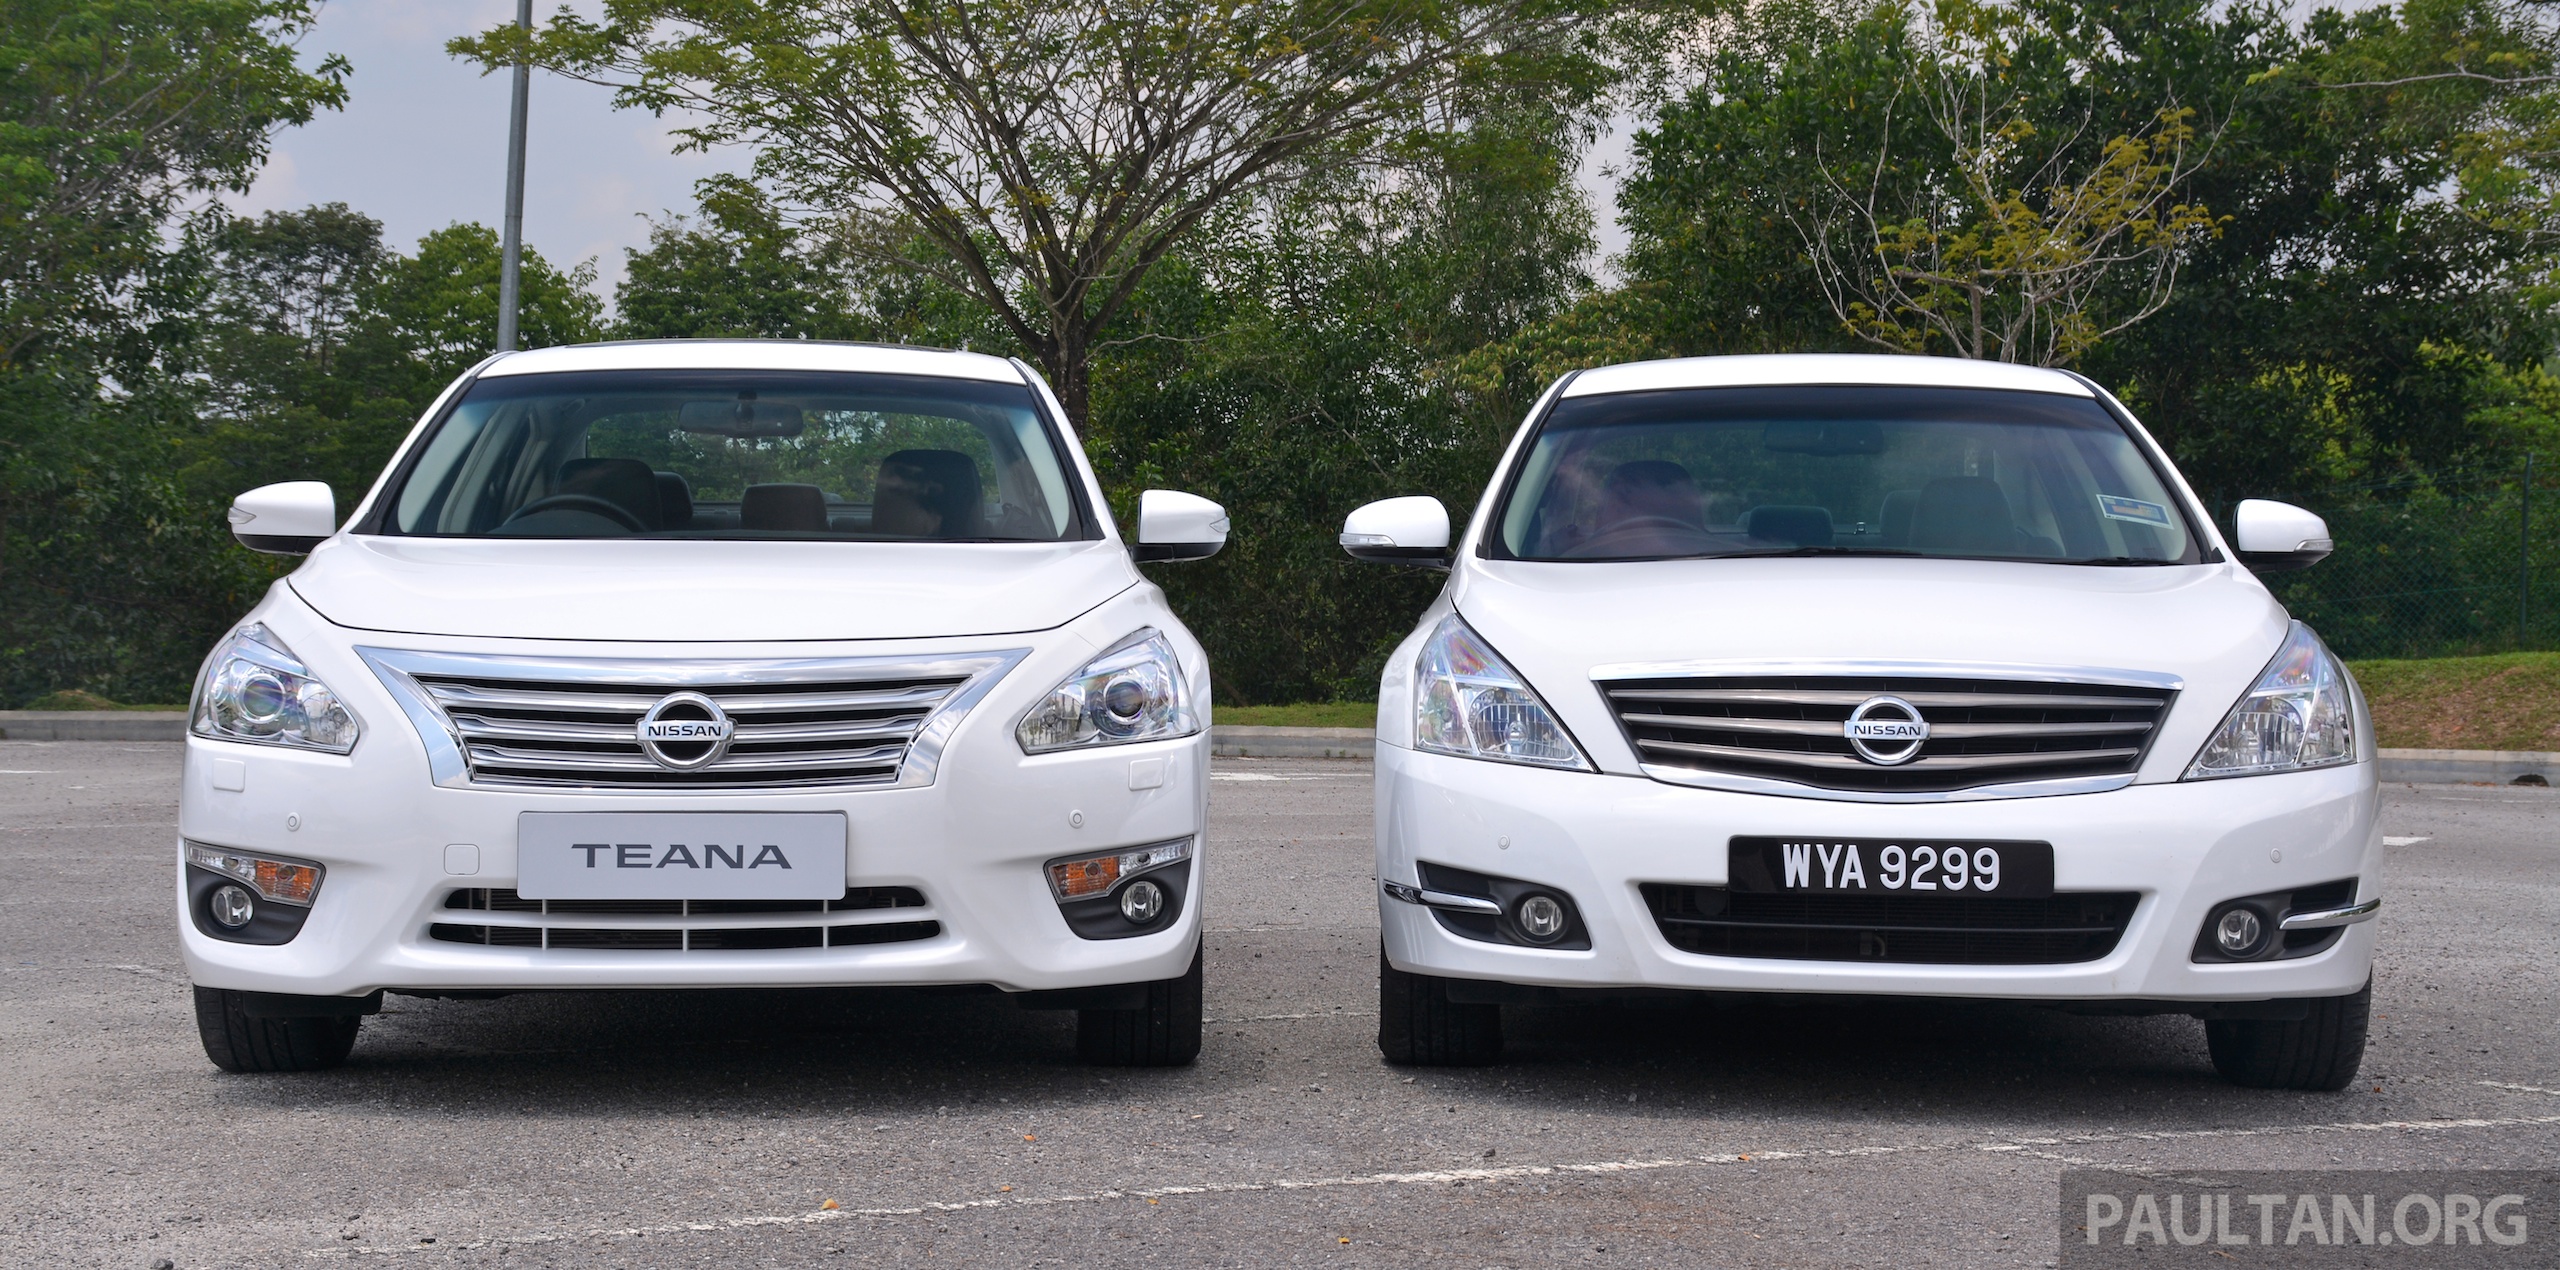 Nissan Teana 2014 Archives - Paul Tan's Automotive News